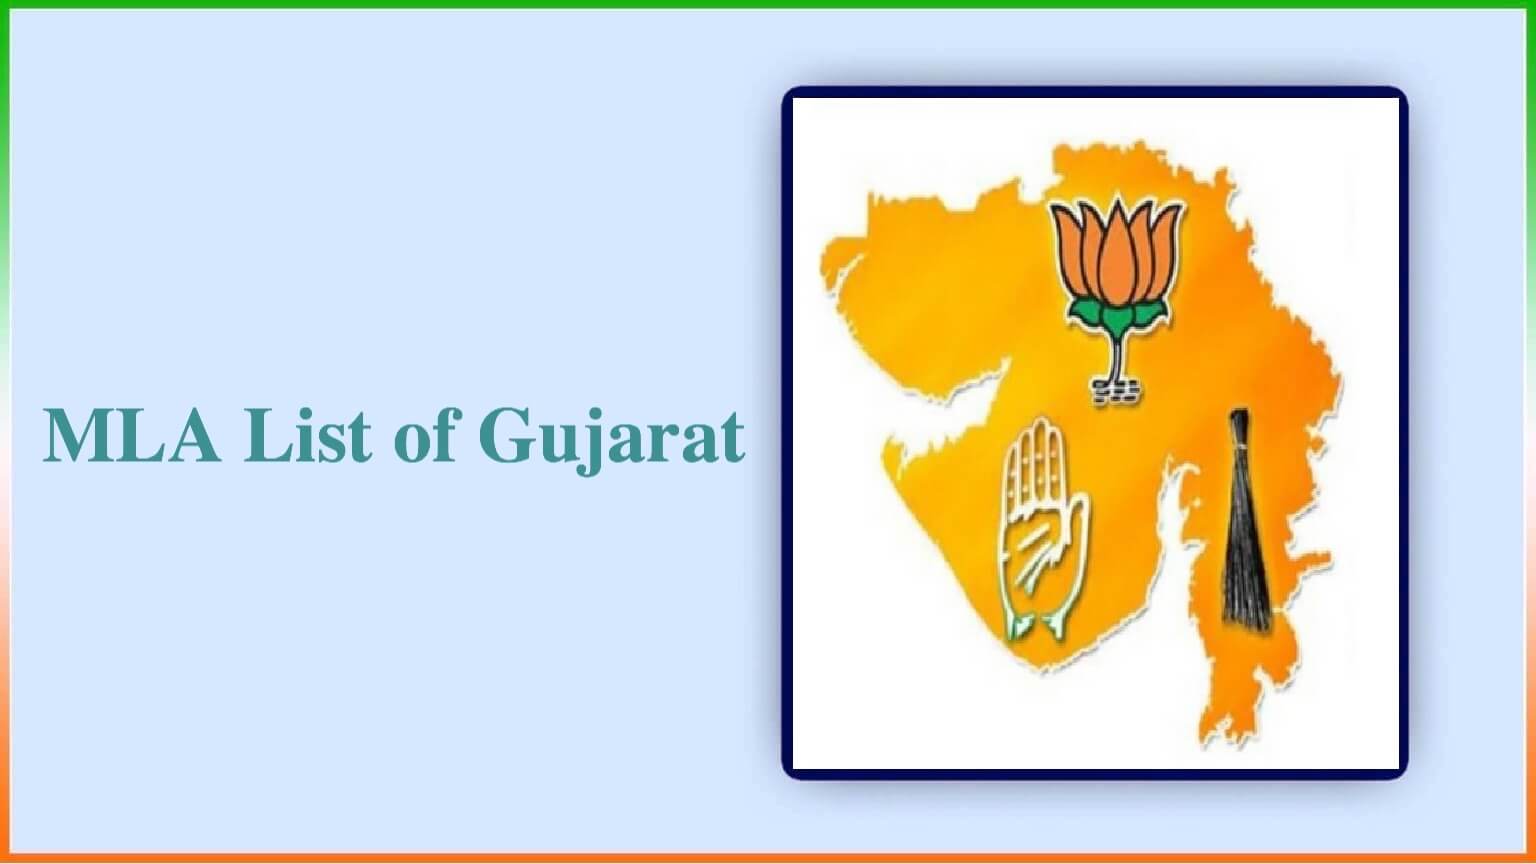 Mla List Of Gujarat